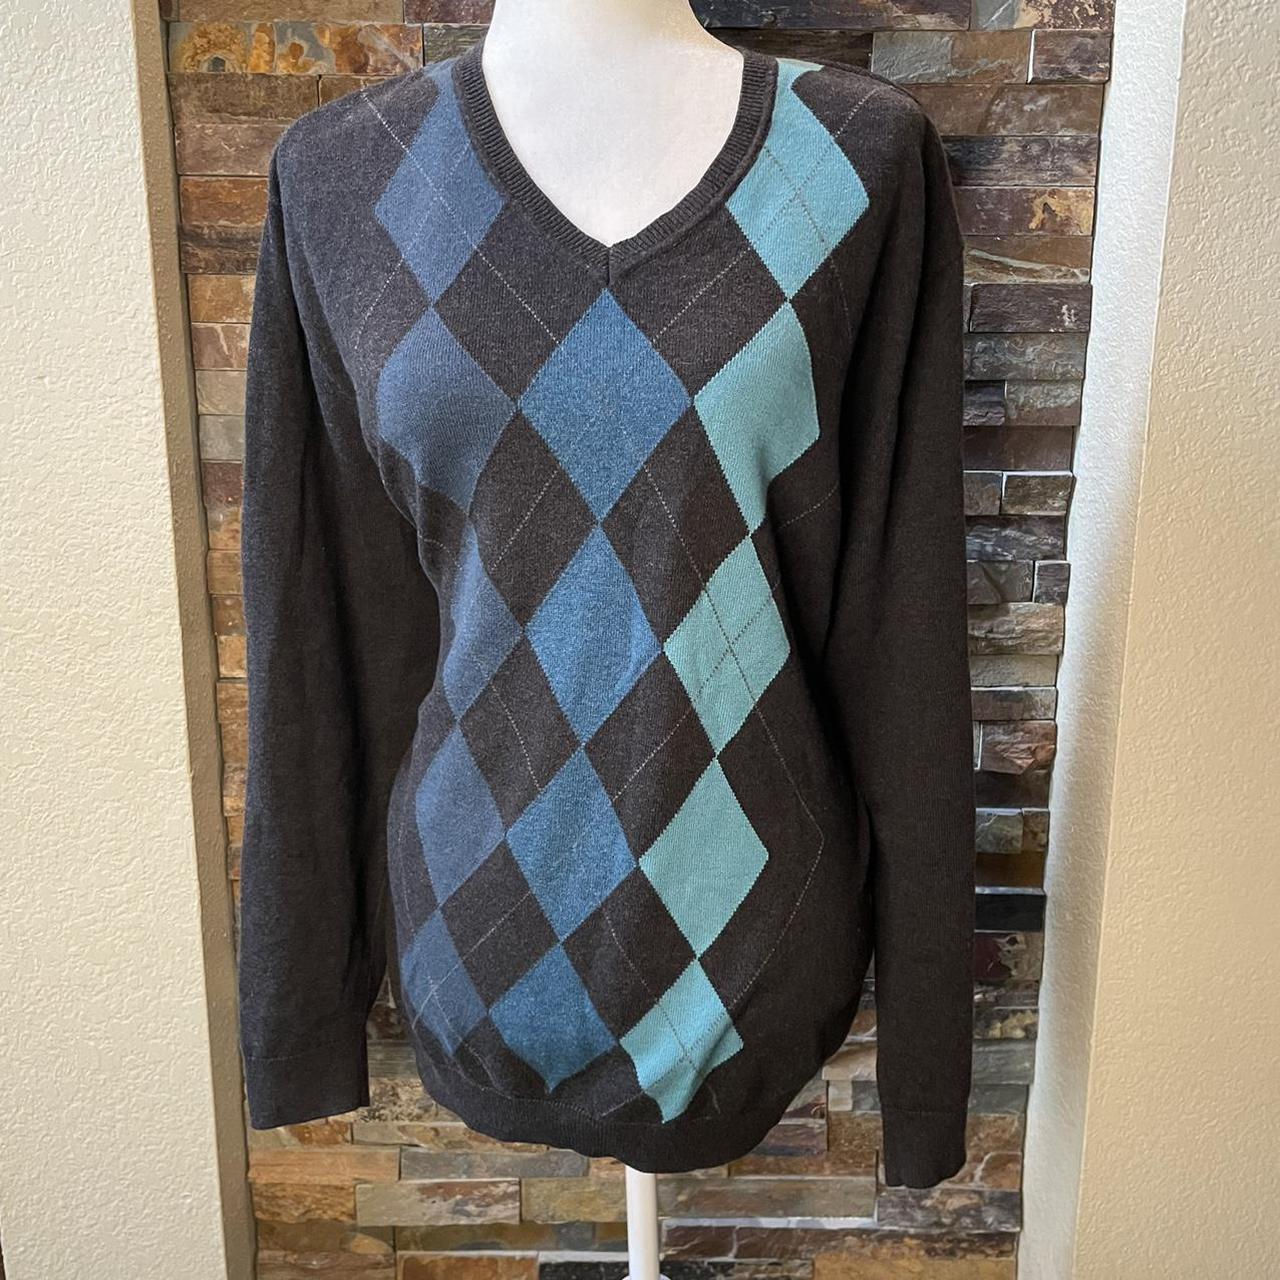 Men’s Argyle Sweater Pattern | The Knitting Network